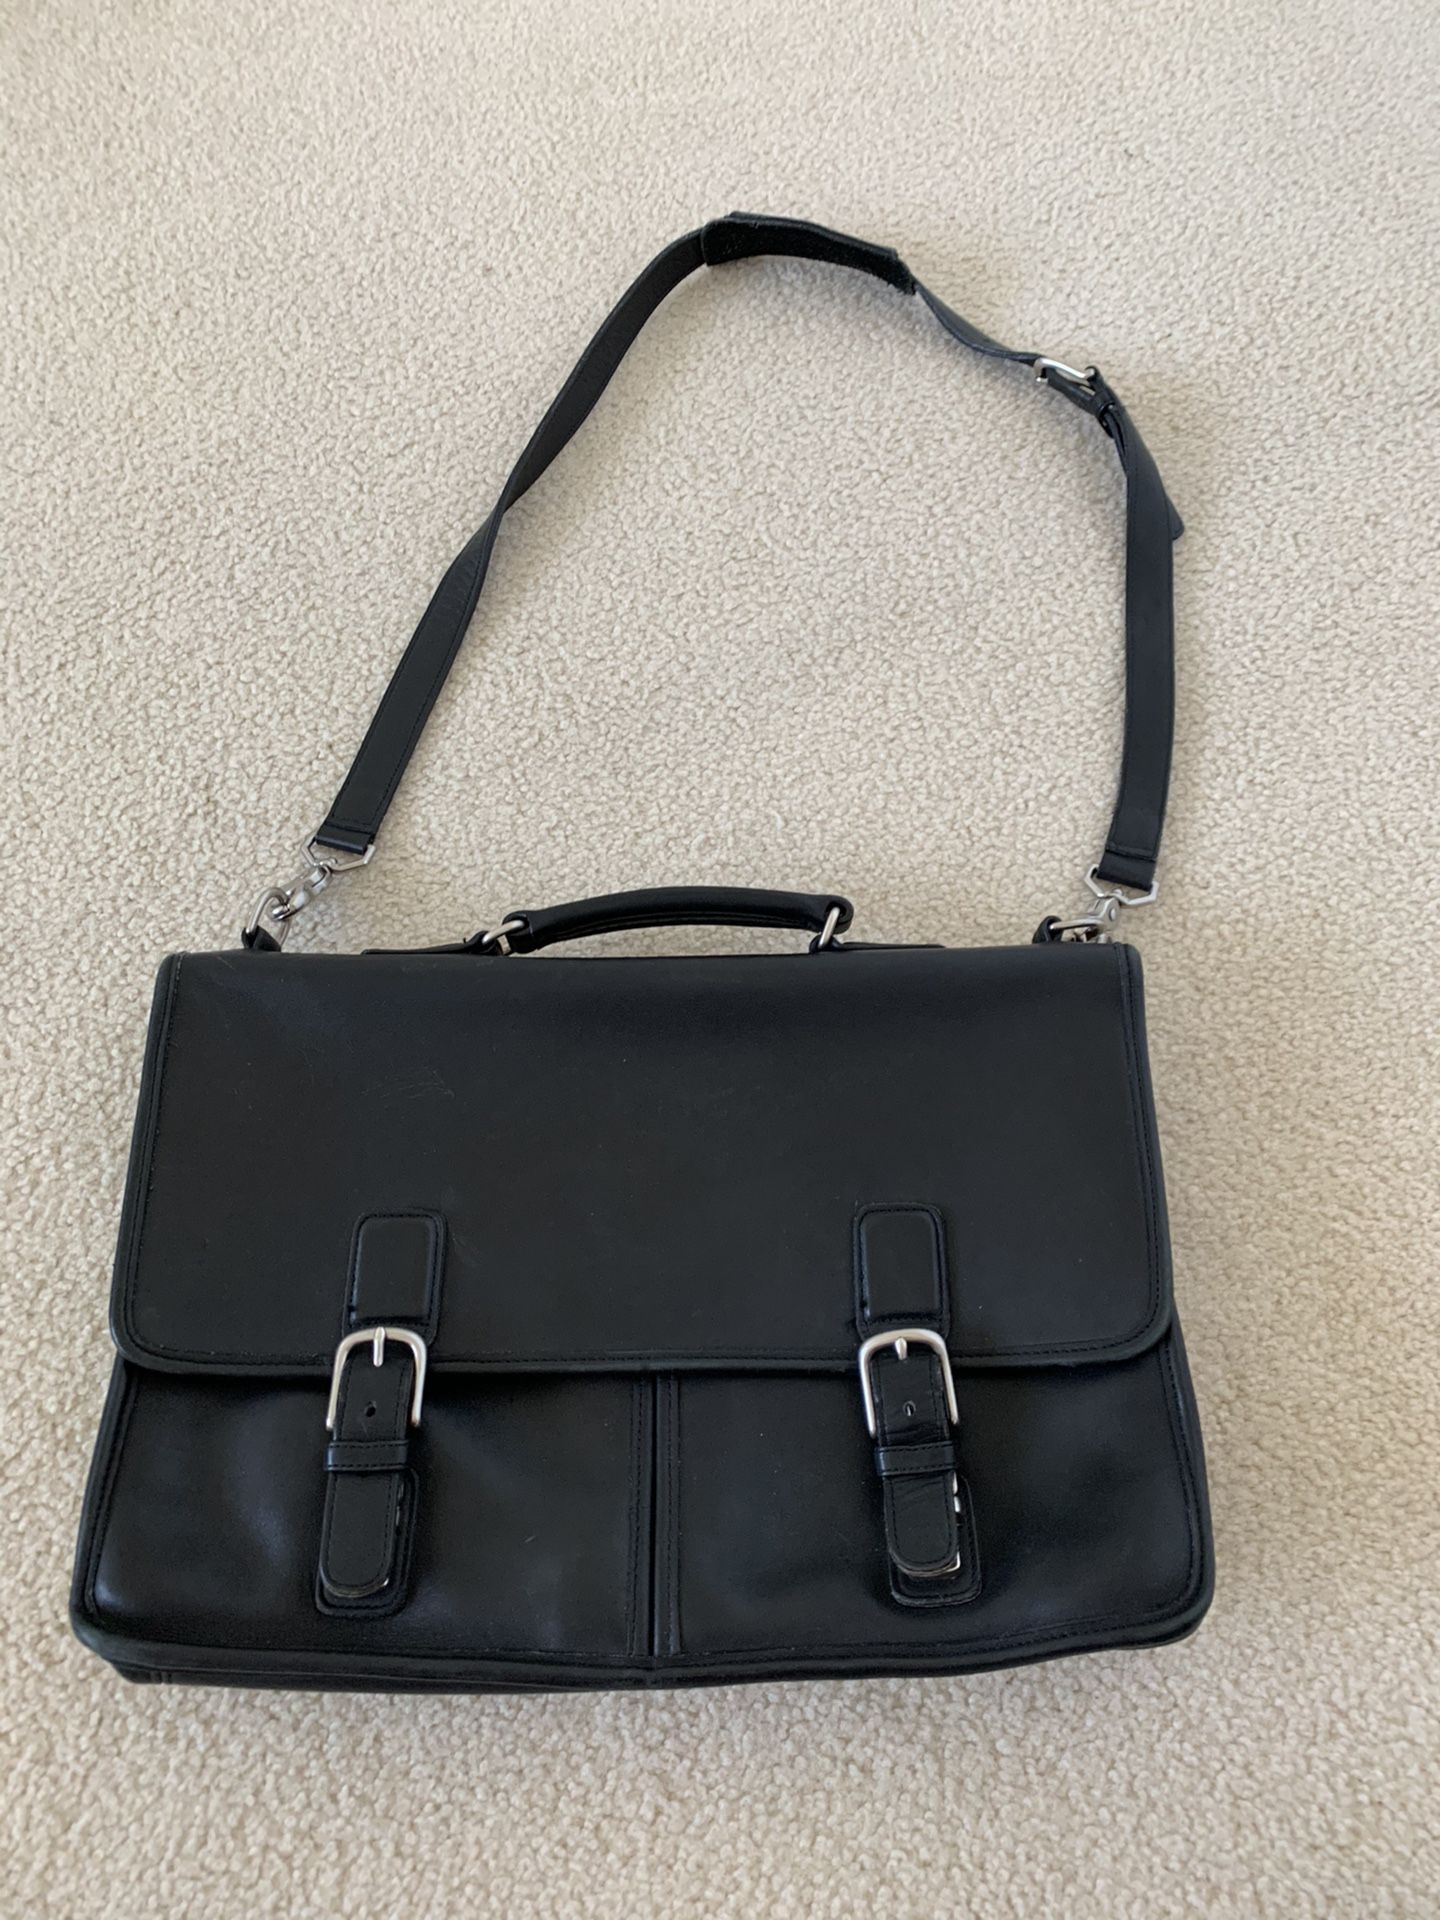 Coach black leather messenger bag